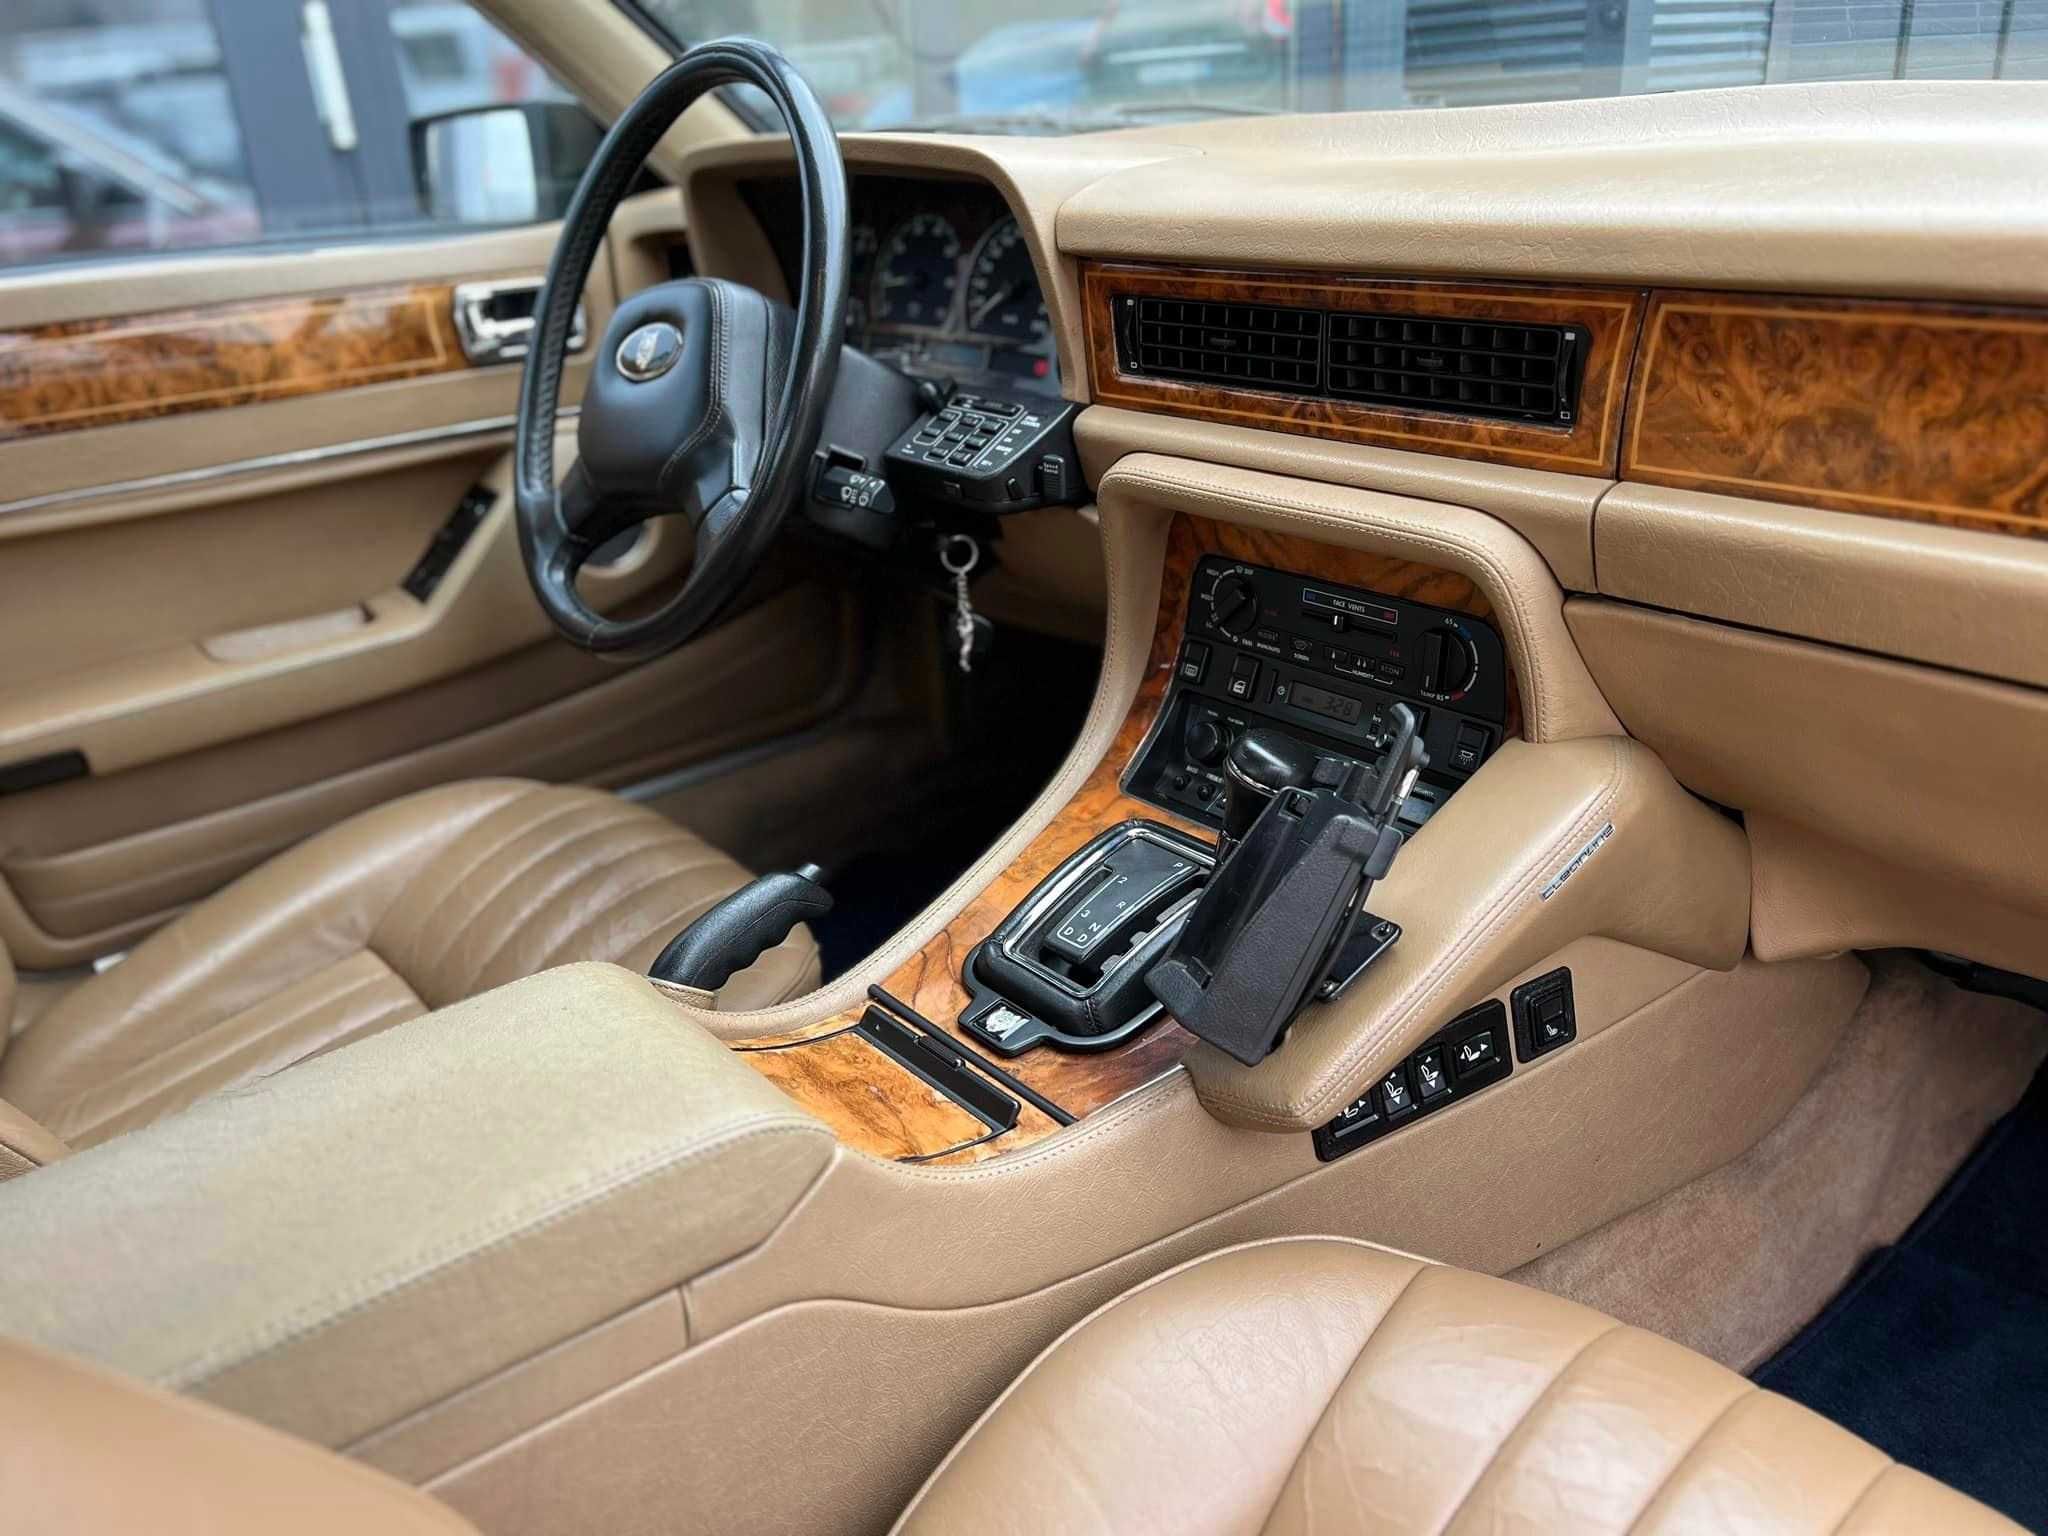 Jaguar Xj40/An 1991/3.2 Benzina-199 Cp/Vehicul atestat istoric in 2023